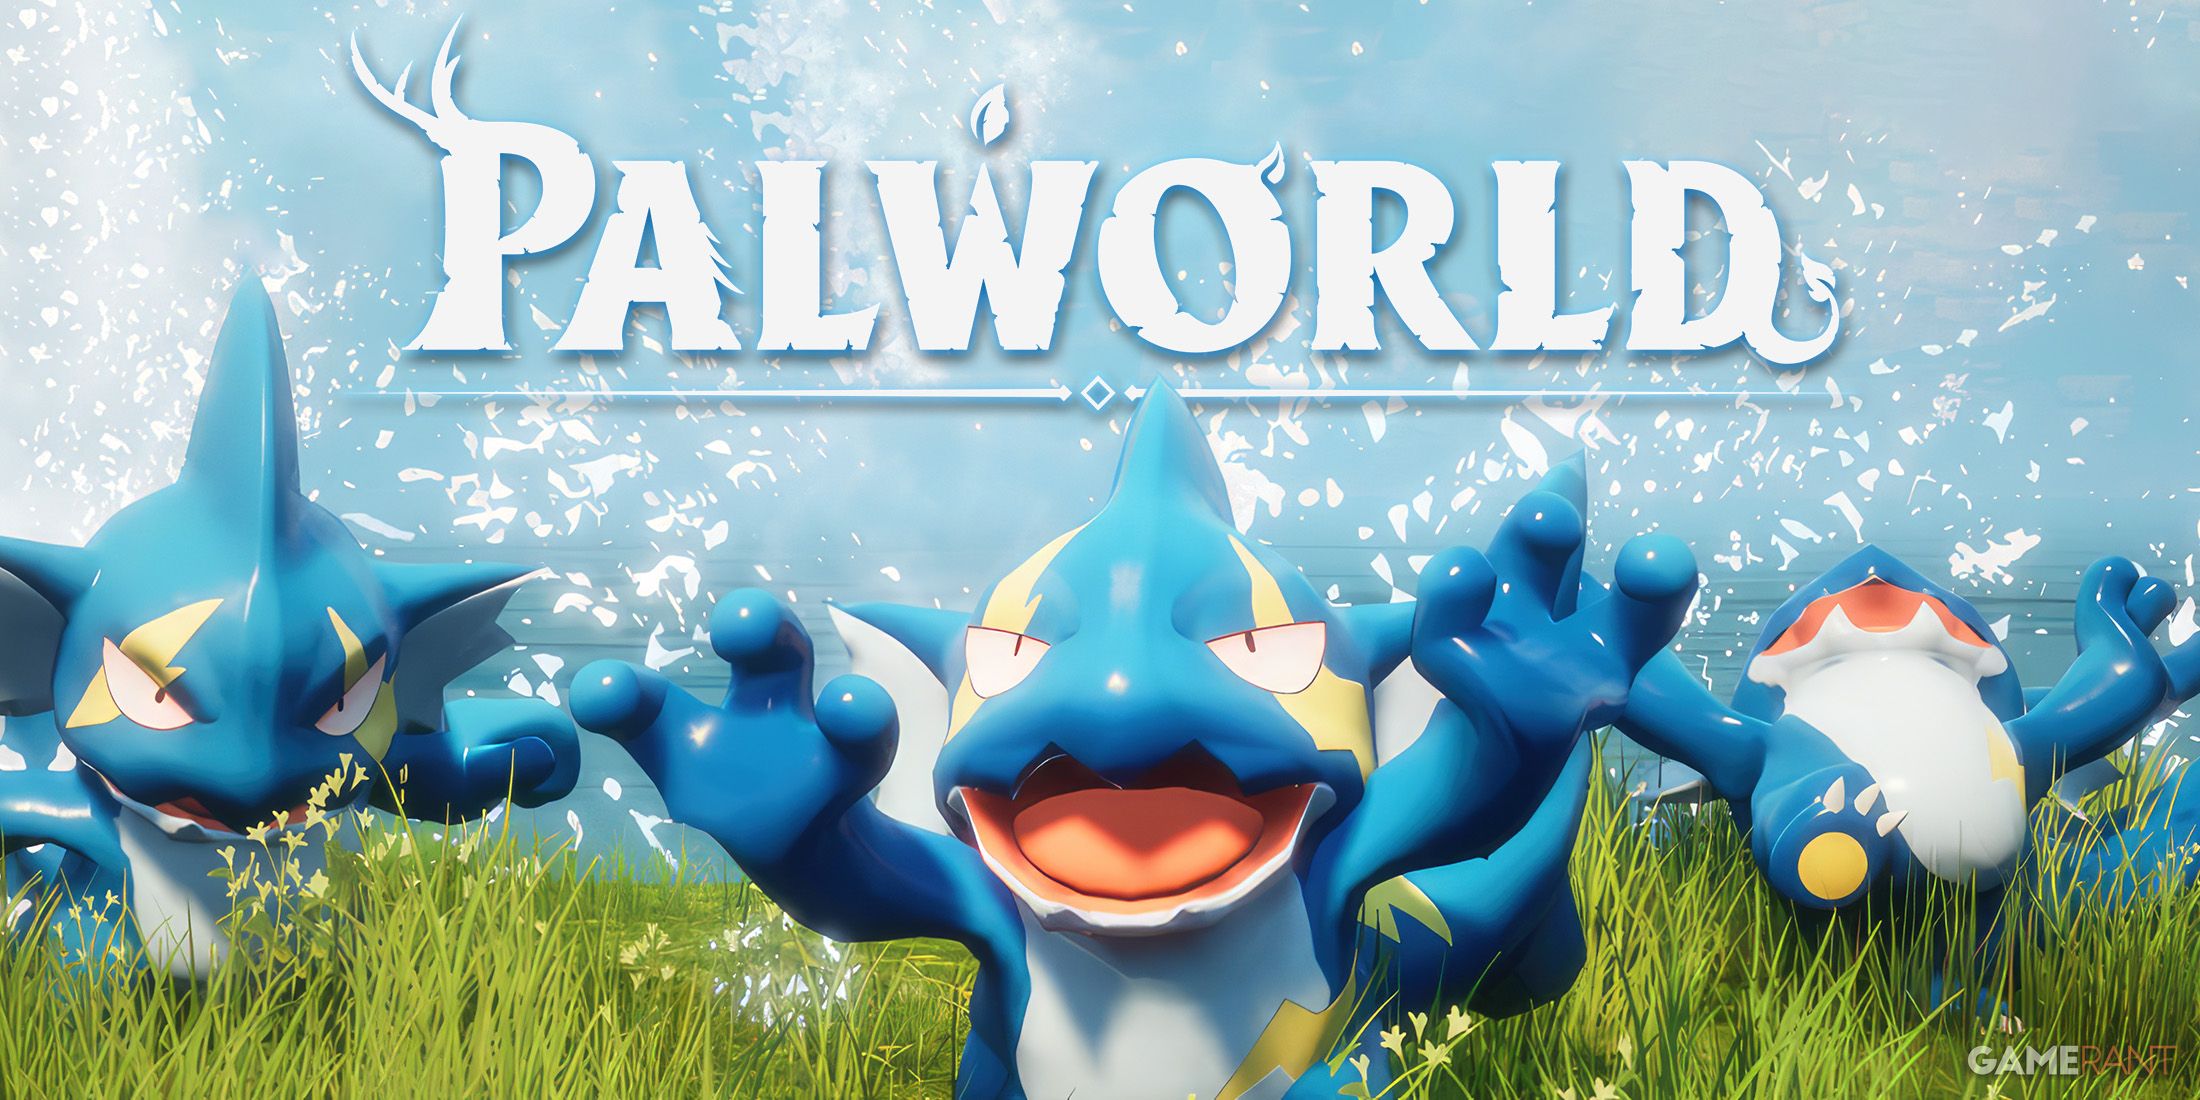 Palworld Gobfins below game logo upscaled